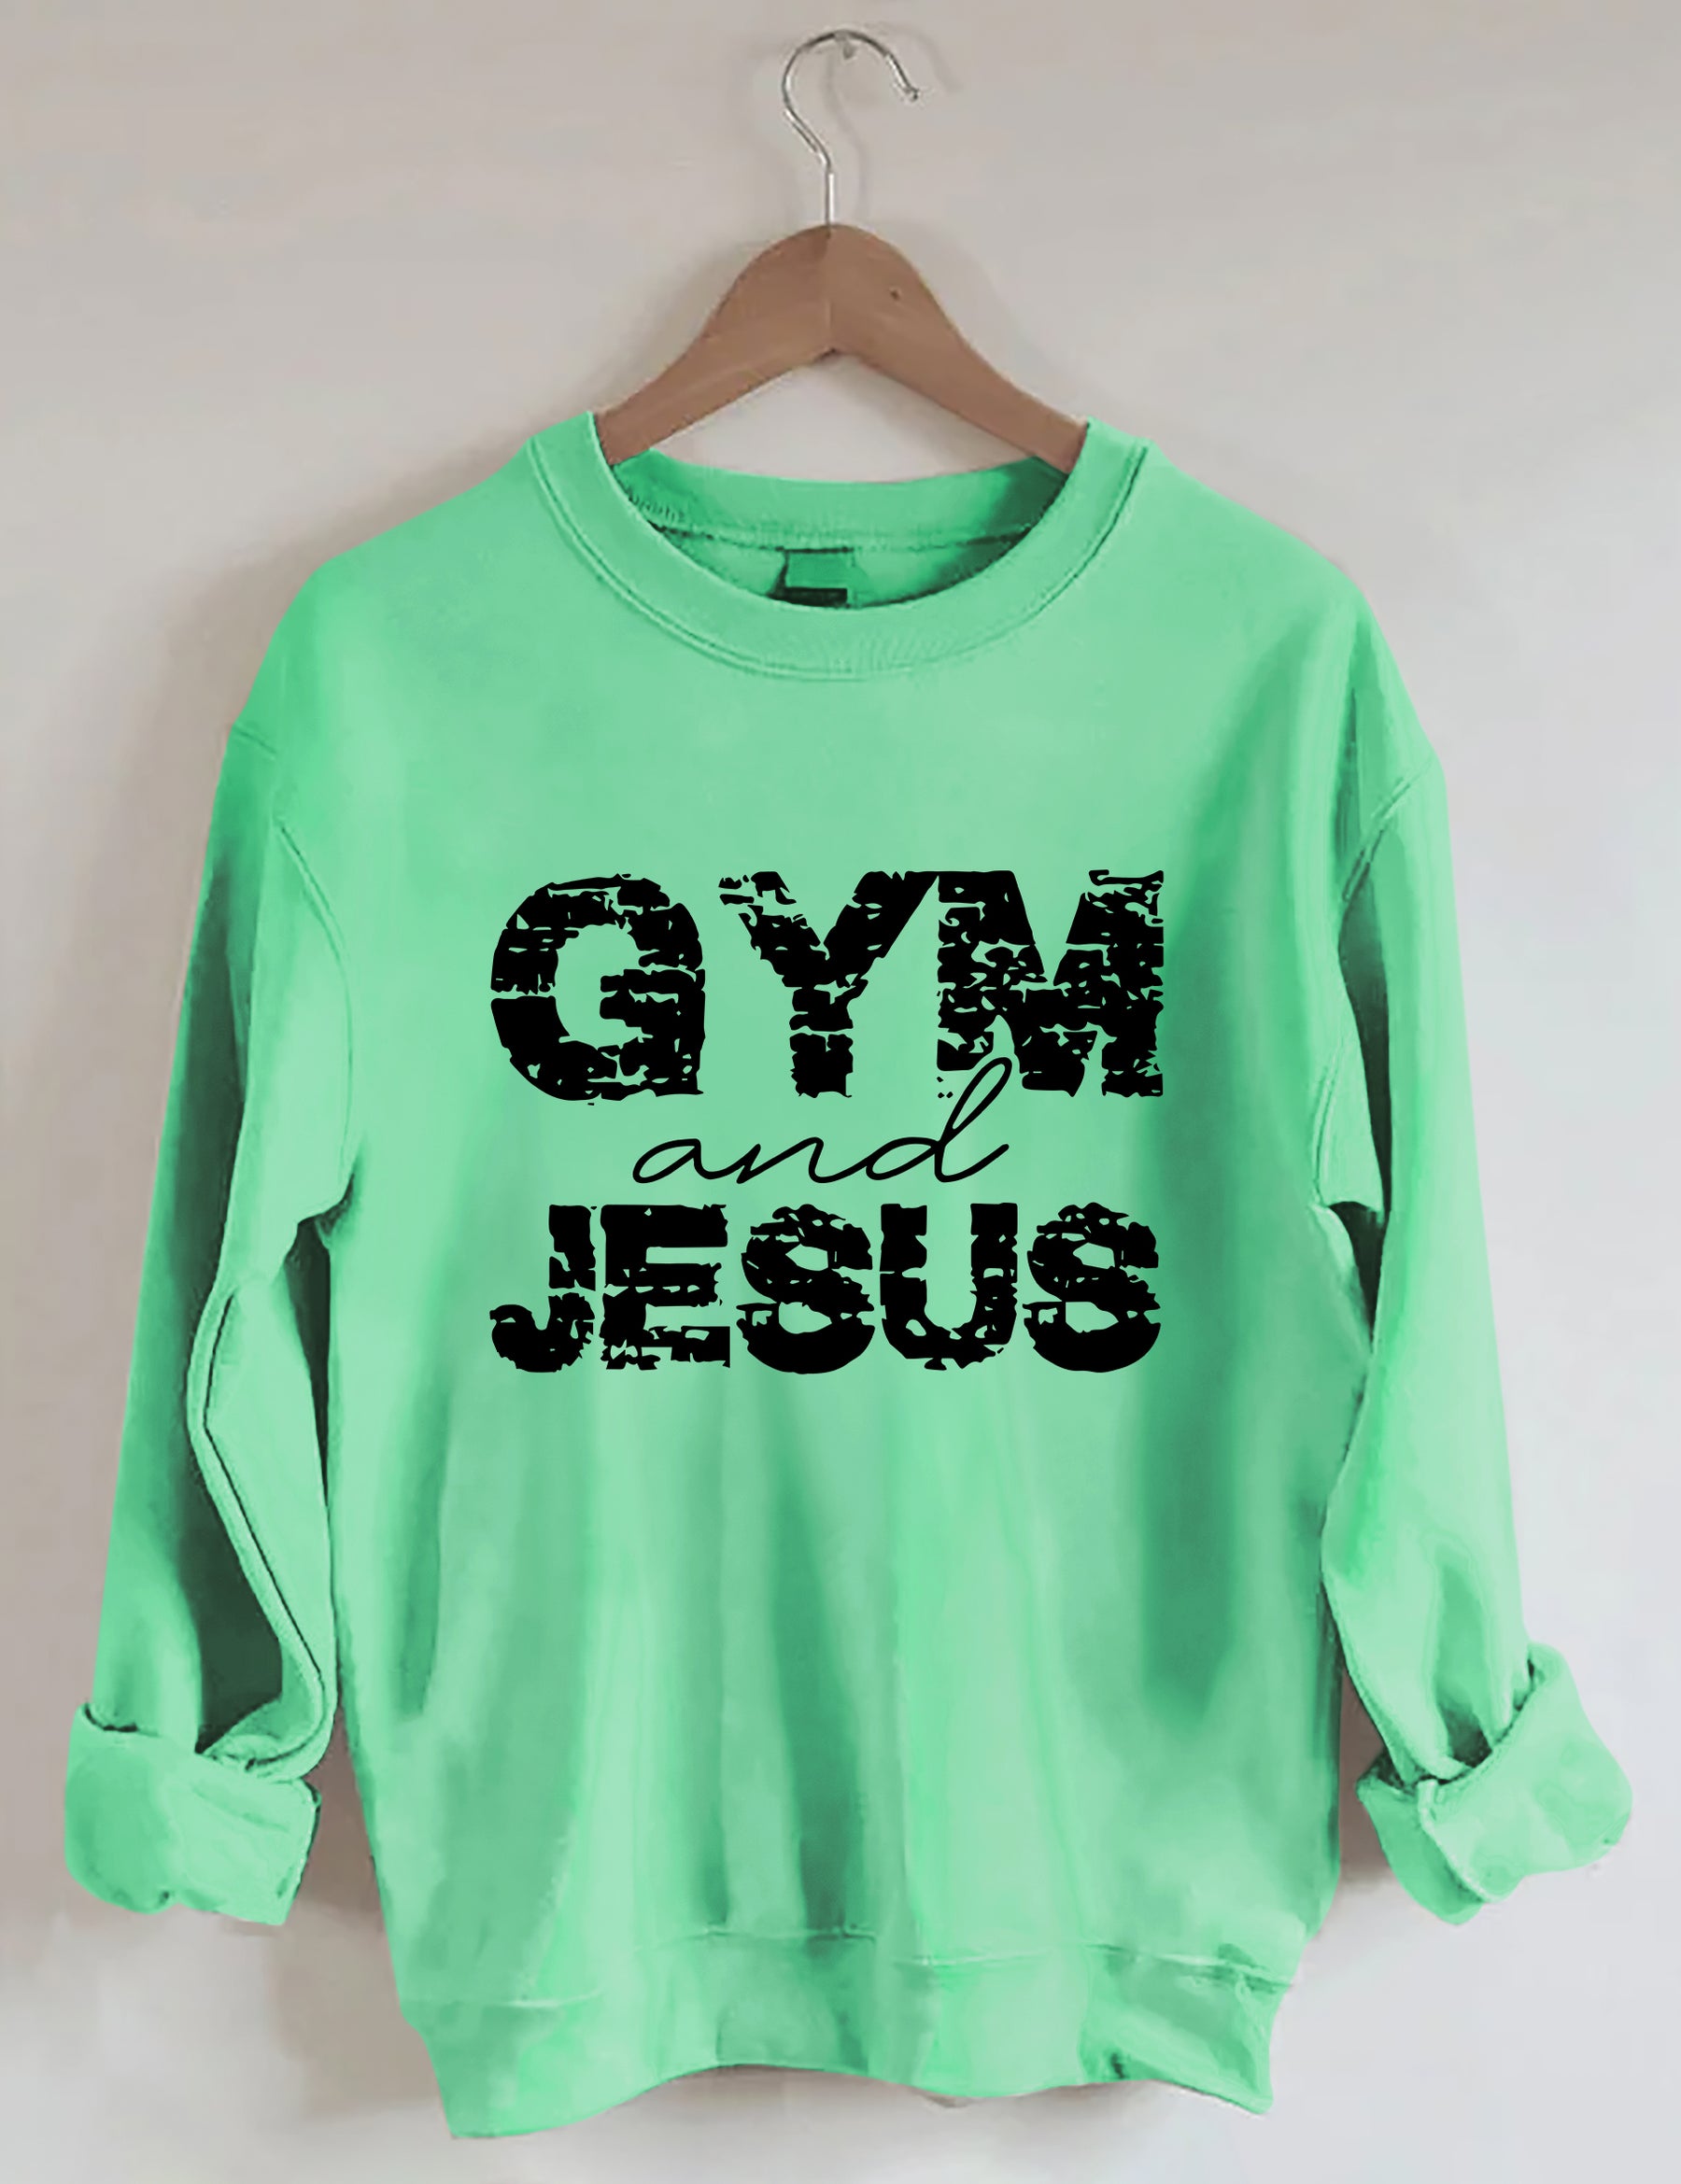 Gym And Jesus Sweatshirts